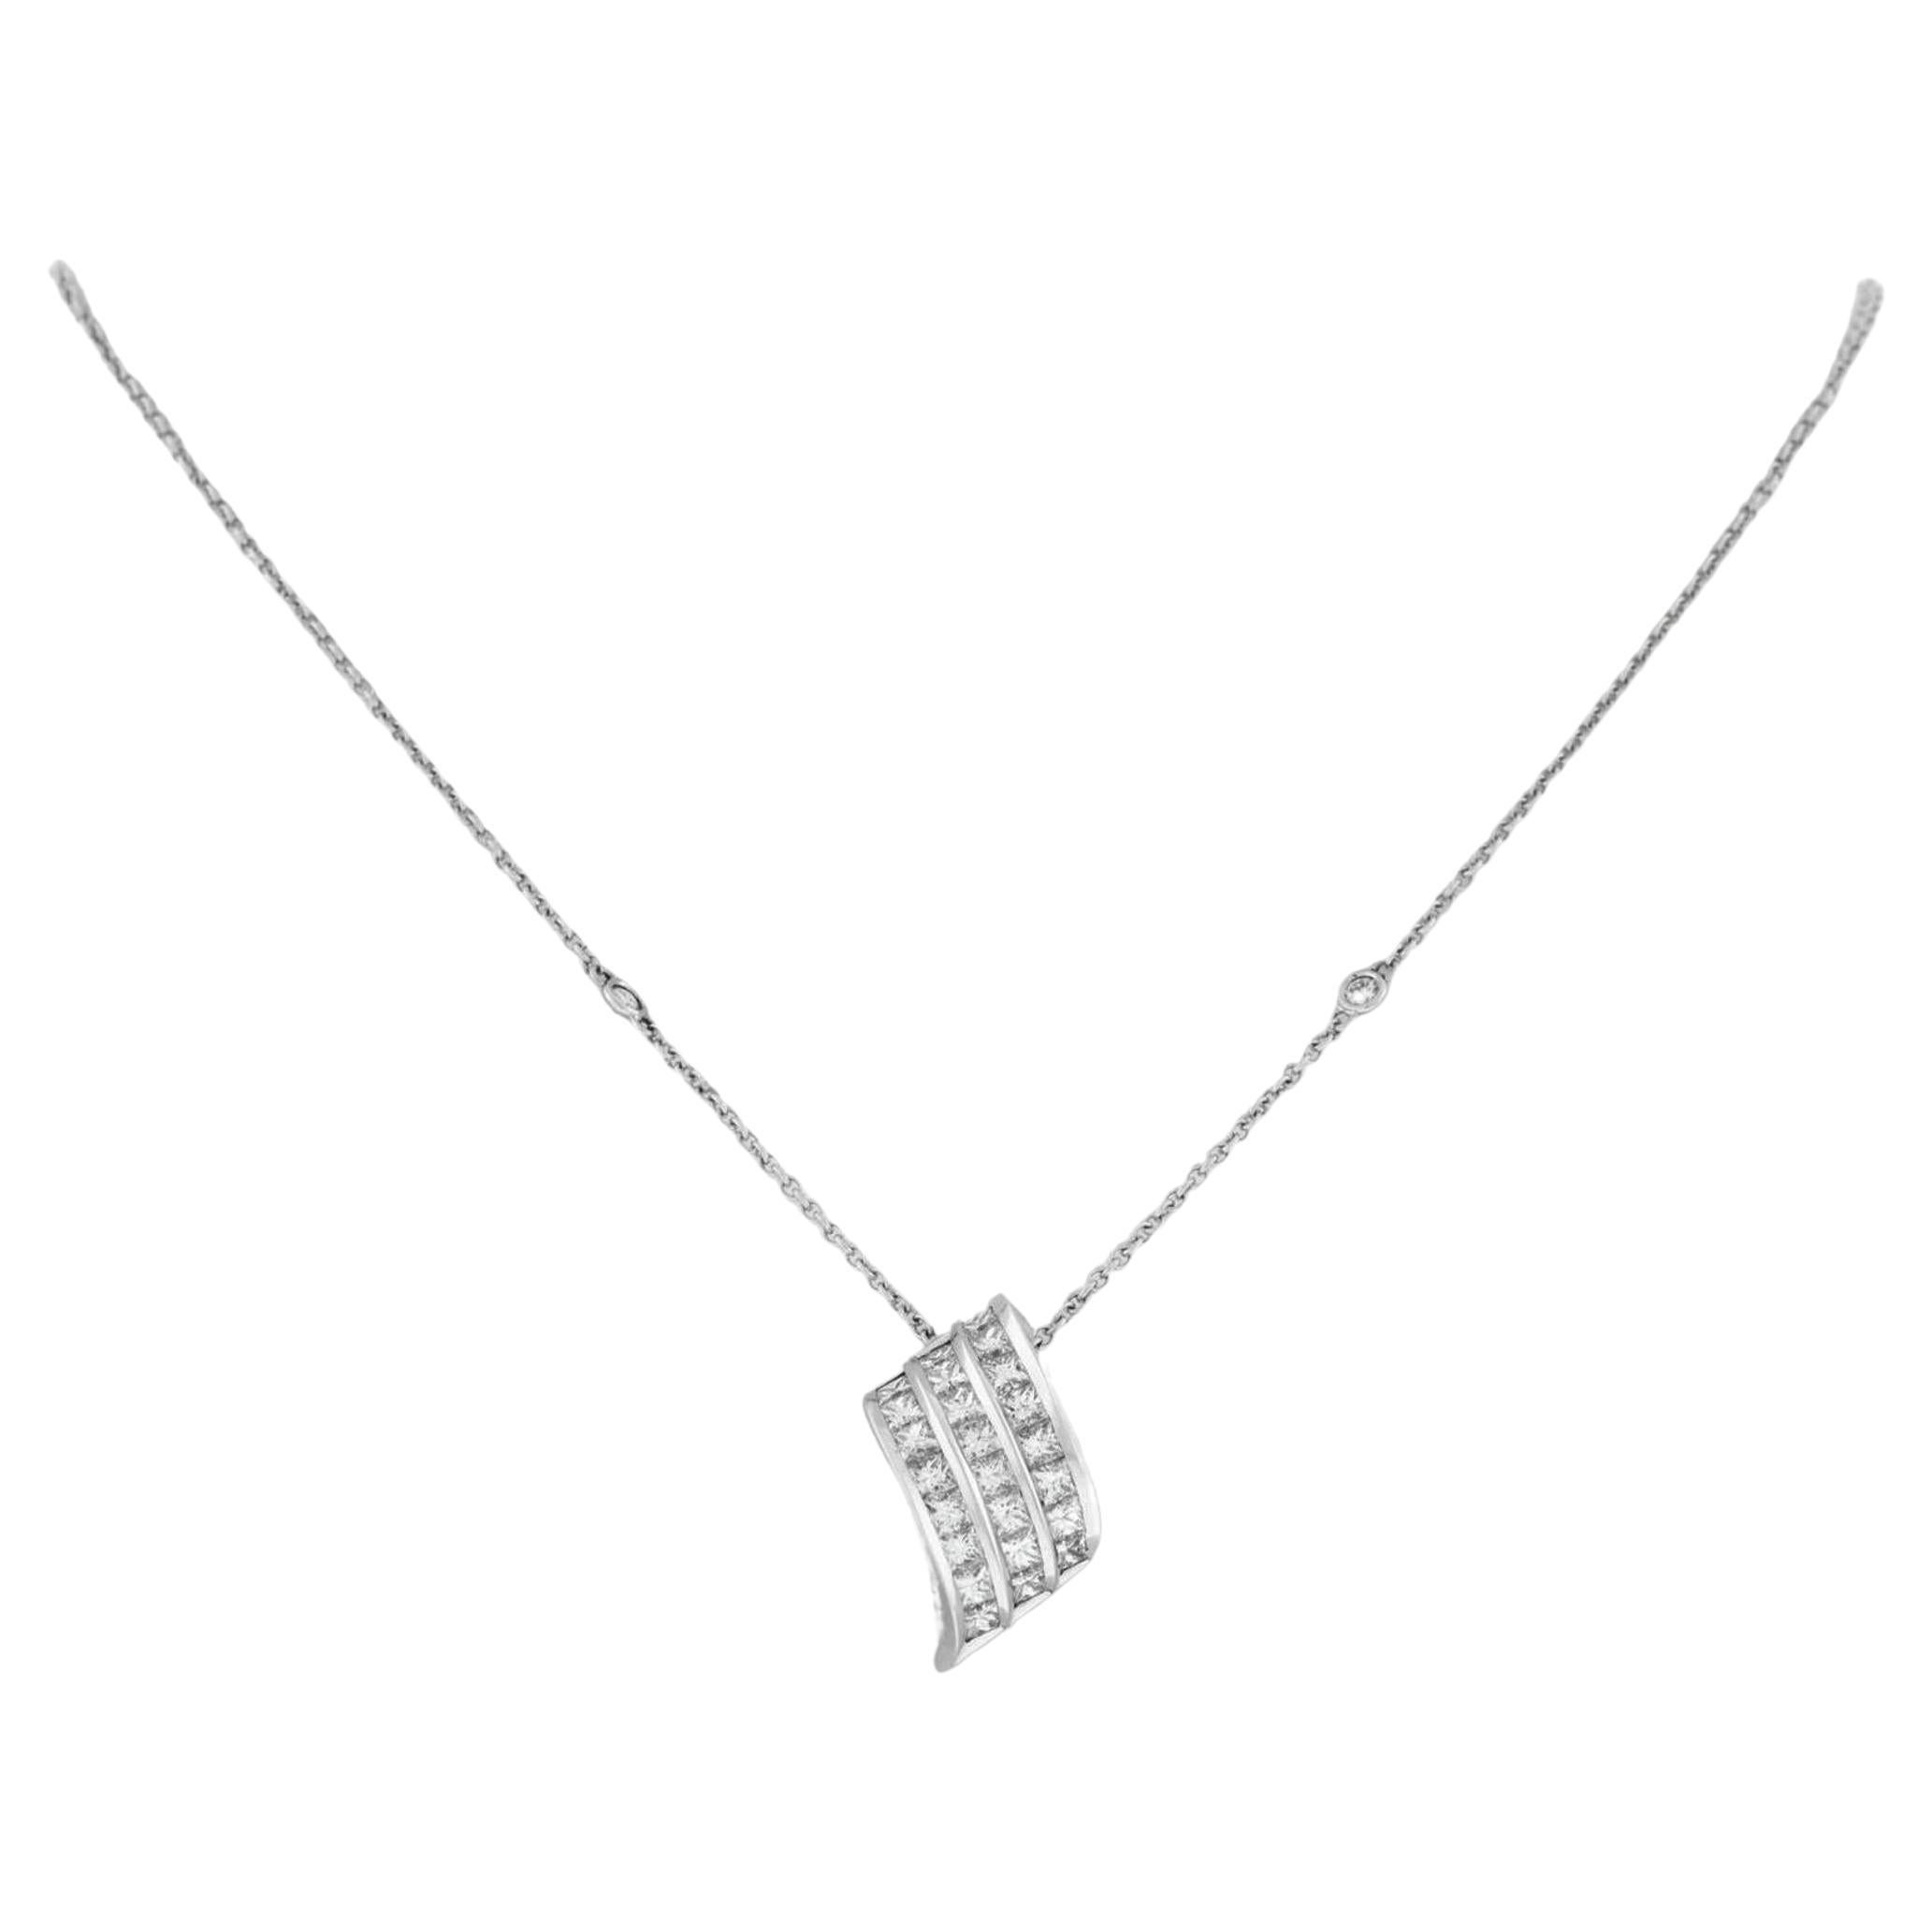 Luca Carati Diamond Pendant Necklace 18K White Gold 1.96cttw For Sale